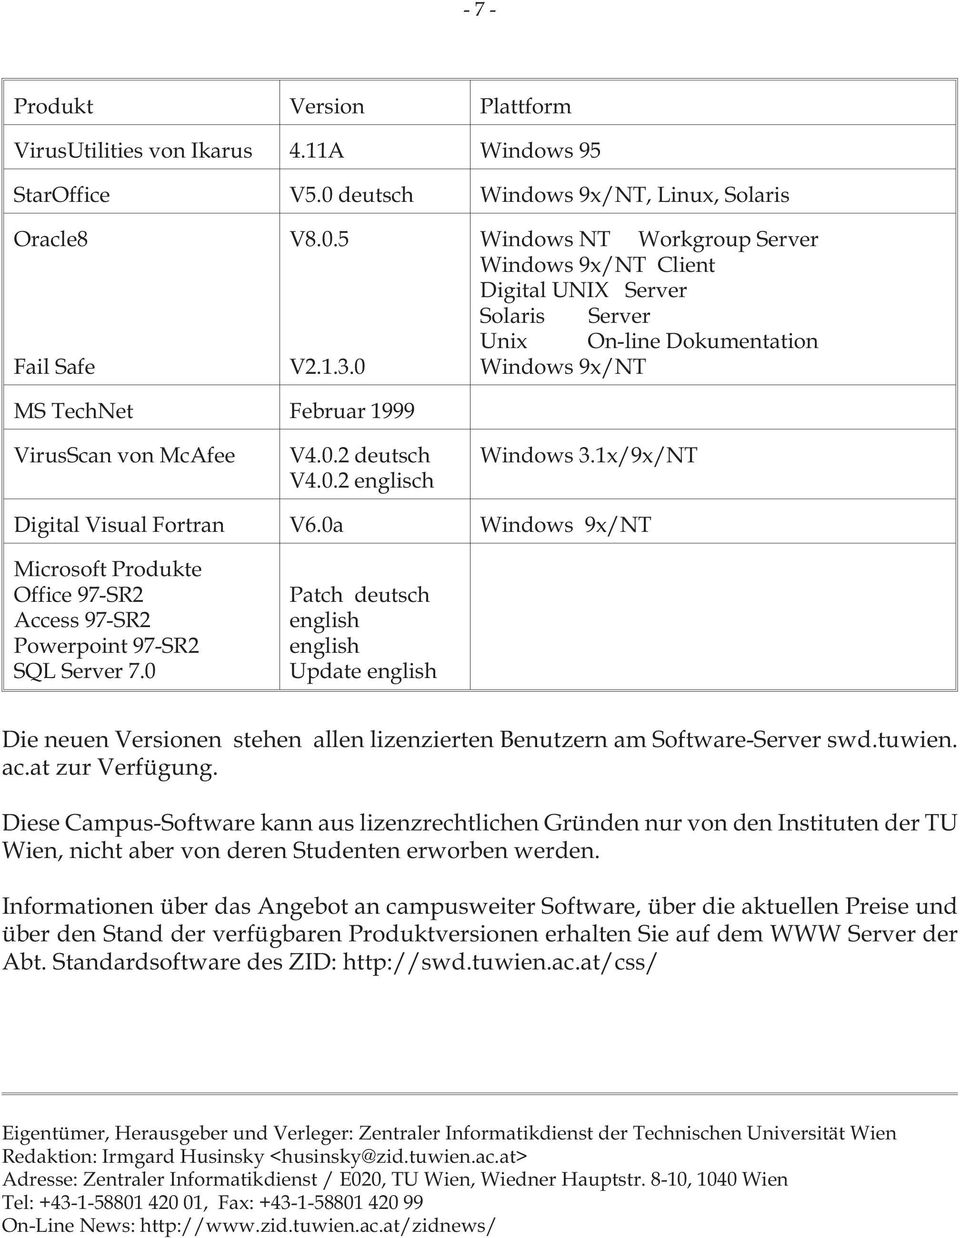 1x/9x/NT Digital Visual Fortran V6.0a Windows 9x/NT Microsoft Produkte Office 97-SR2 Access 97-SR2 Powerpoint 97-SR2 SQL Server 7.